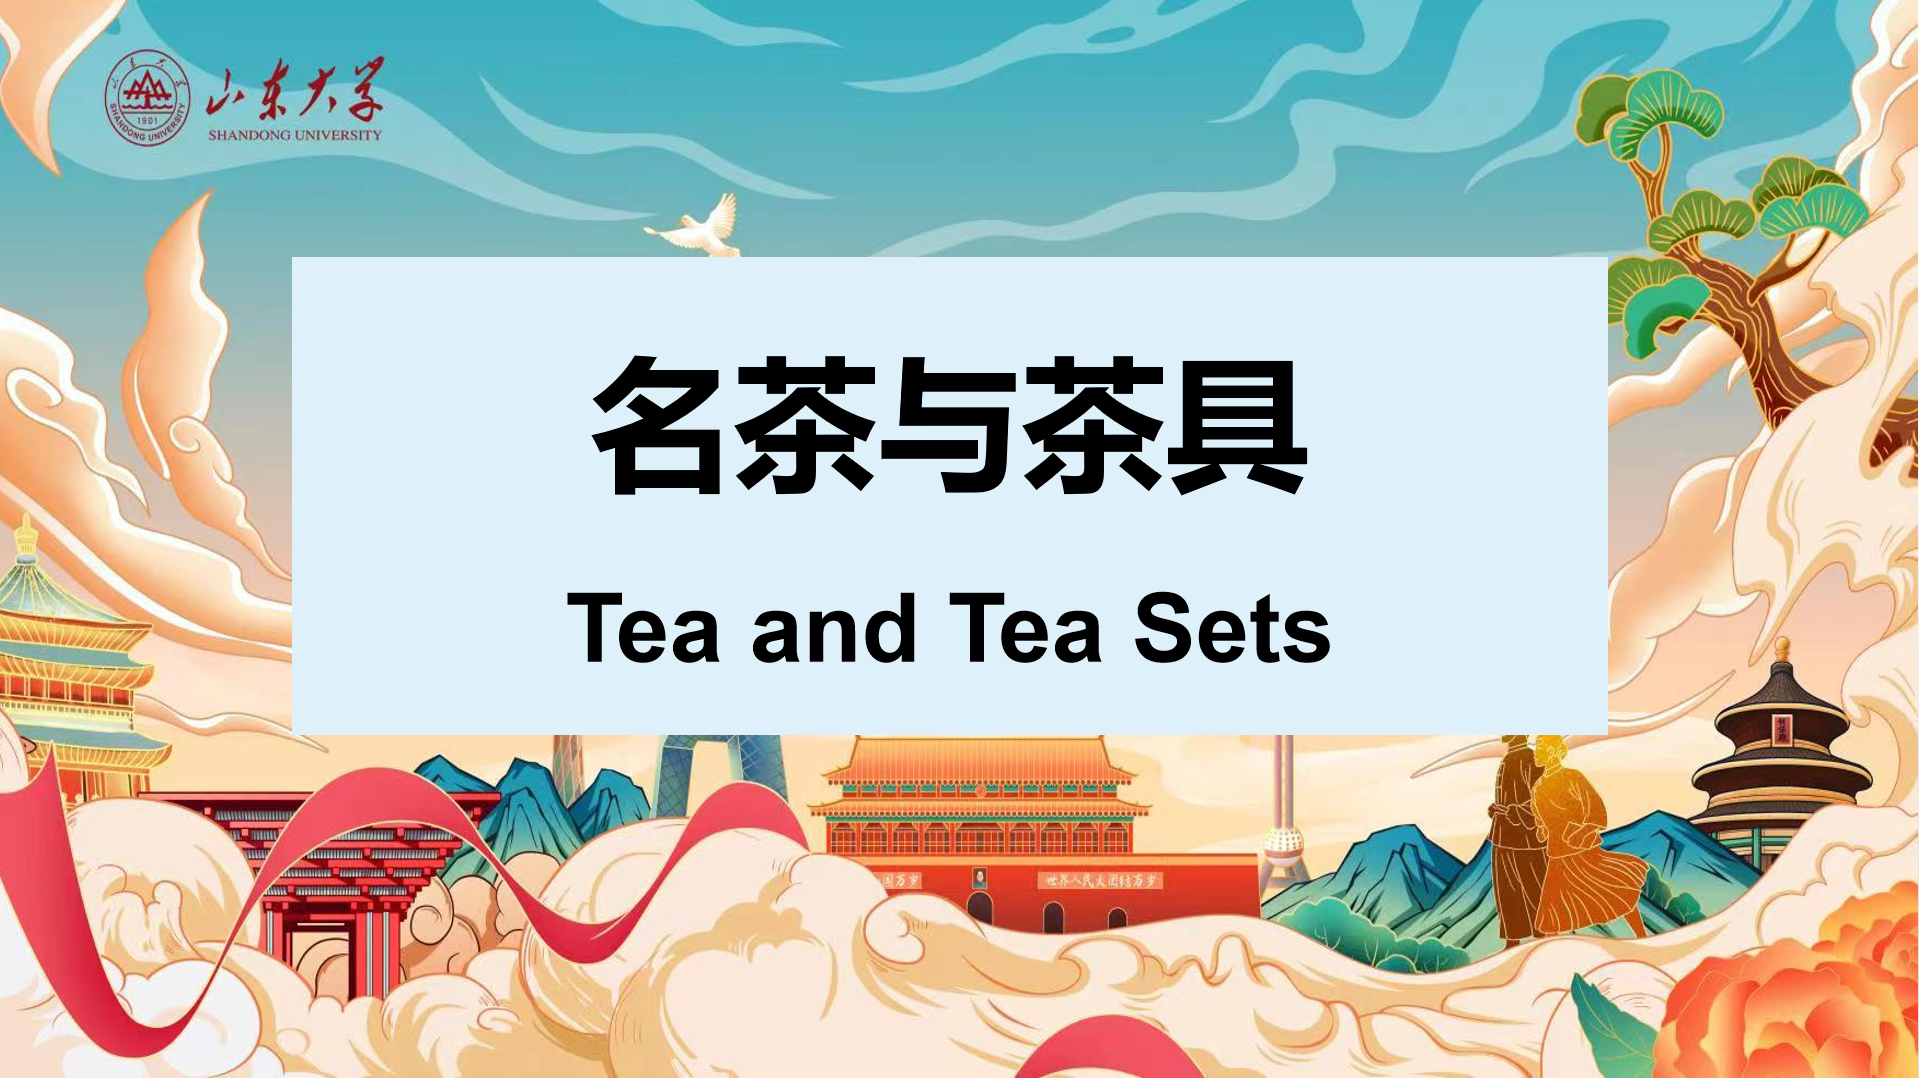 Tea and Tea Sets